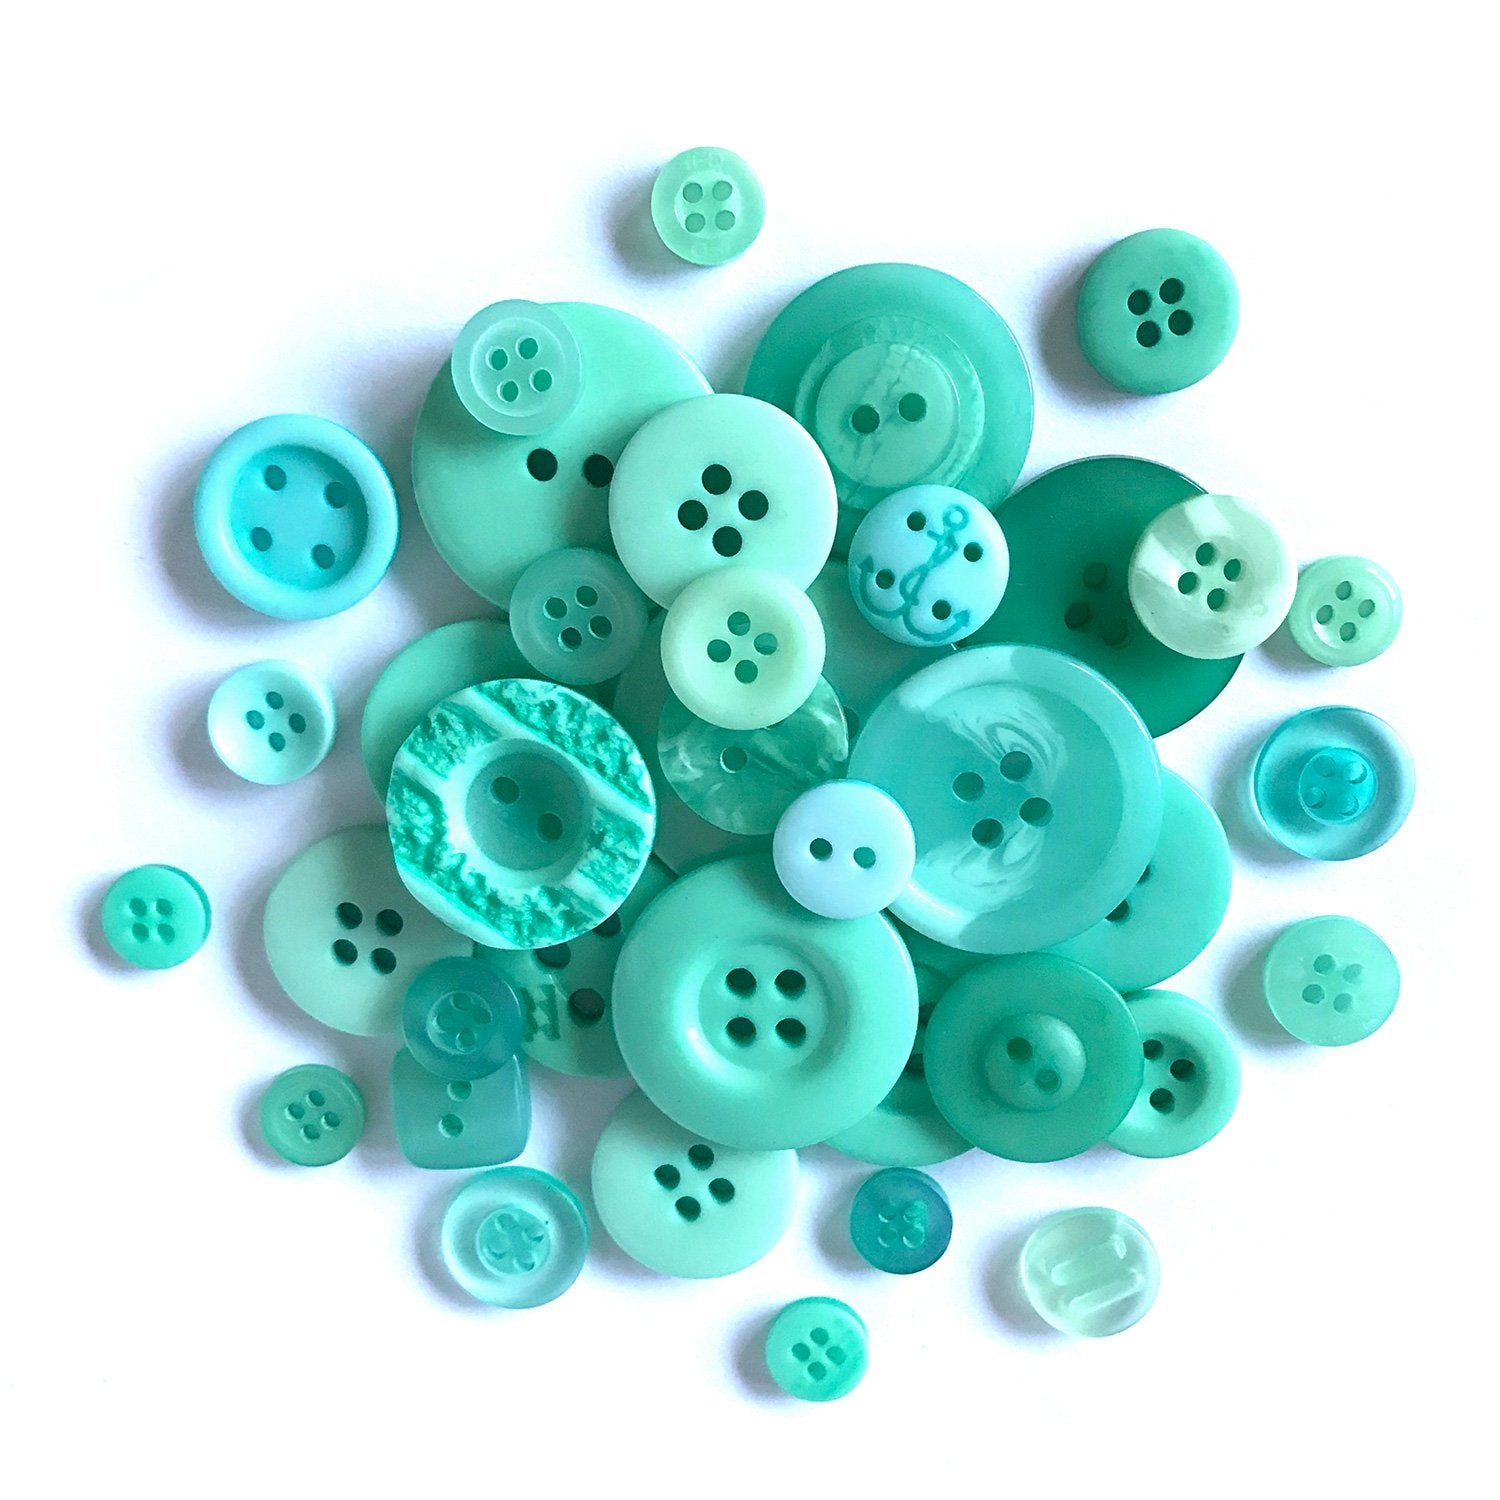 KK25 Dark Blue Green Round Shirt Buttons 9mm 3/8 4 Hole 25 Pieces Sewing  Craft 755675236505 on eBid United States